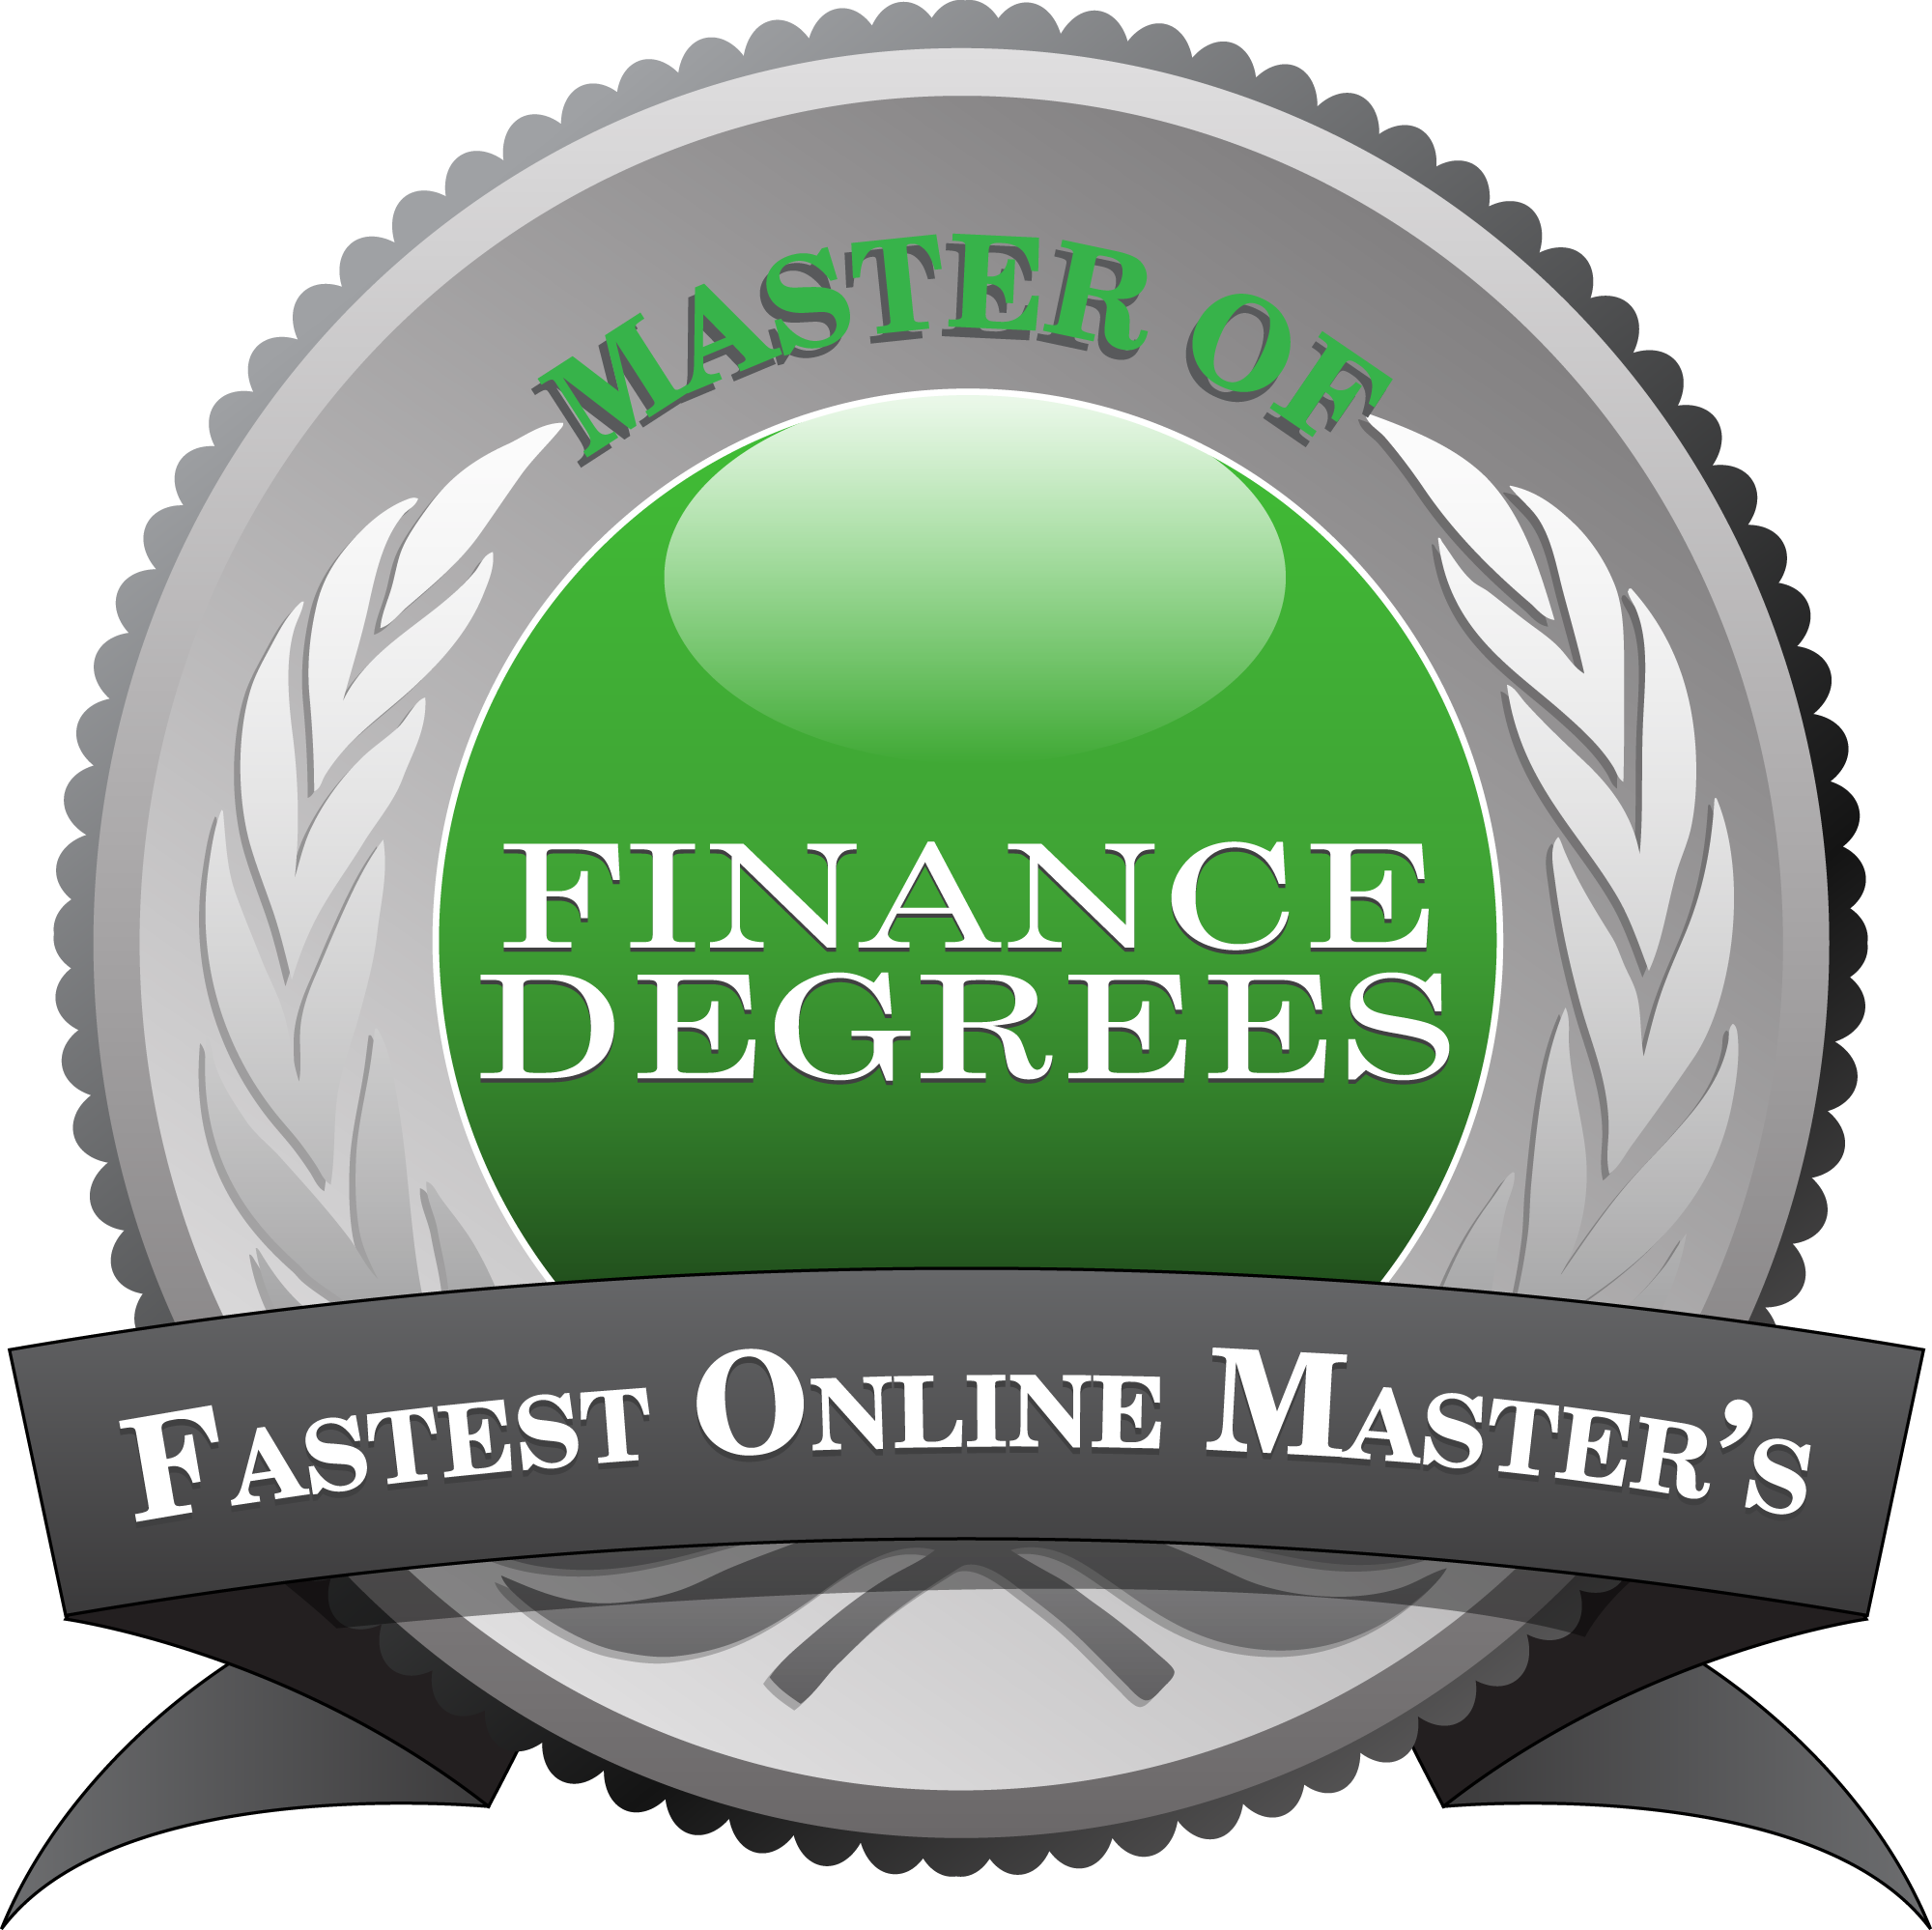 15 Fastest Online Master's in Finance 2020 Master of Finance Degrees